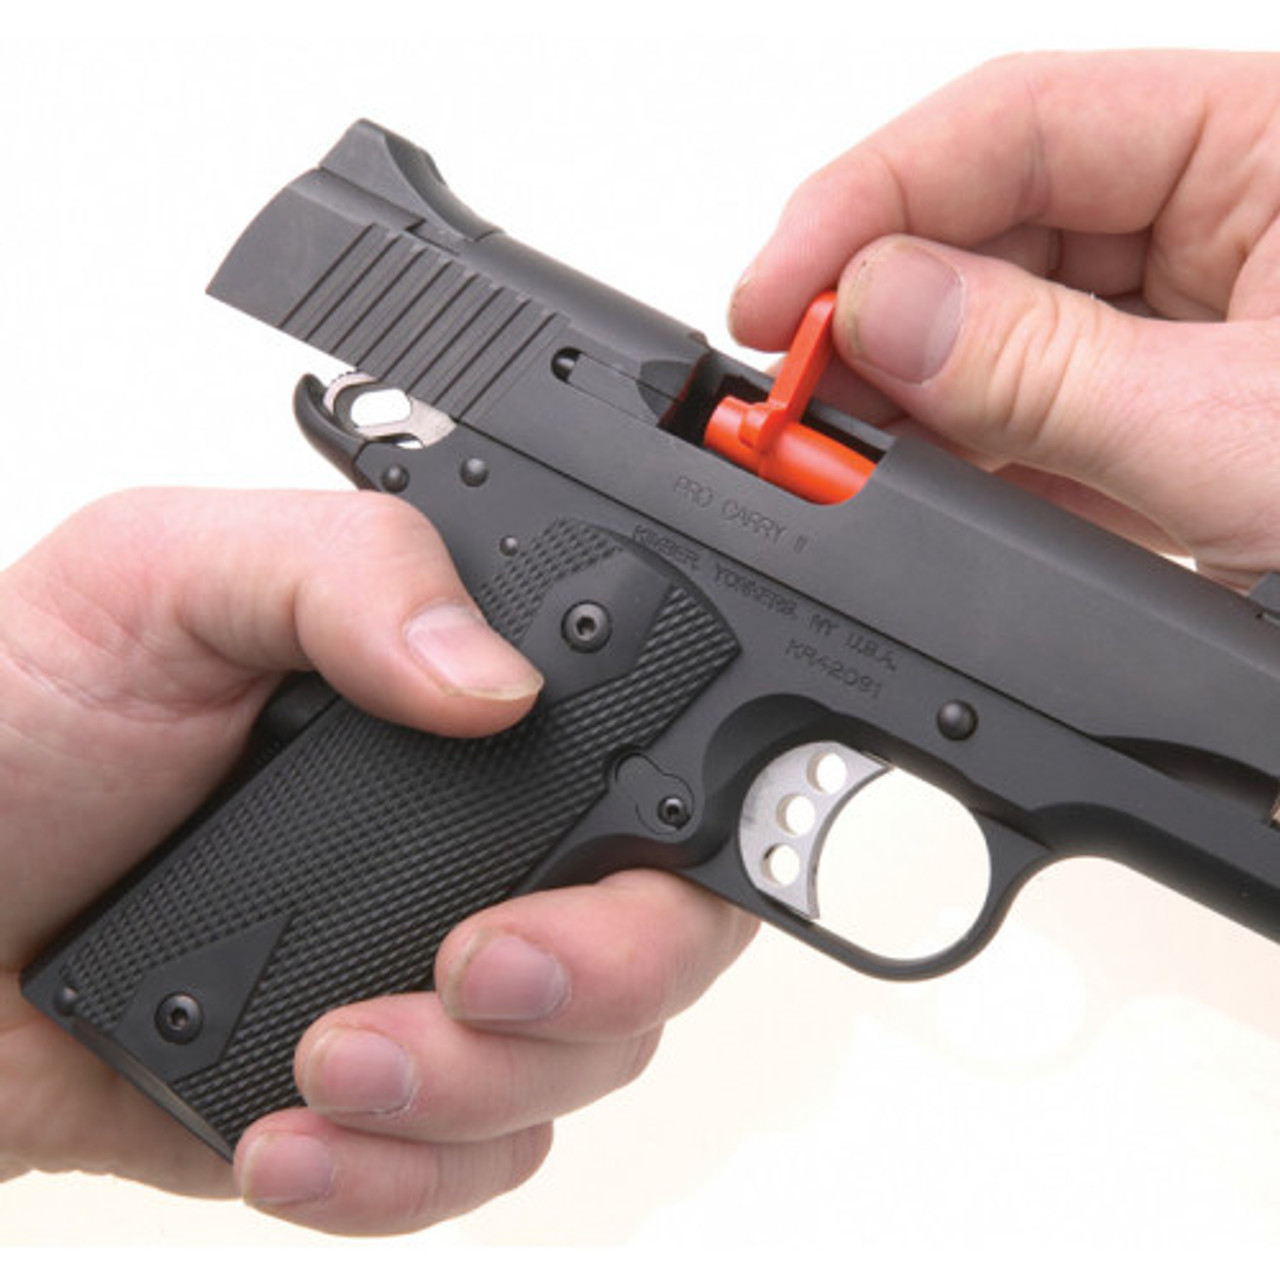 Gun Range Safety Chamber Flag for any 9mm Pistol Made in USA 3 Pack 